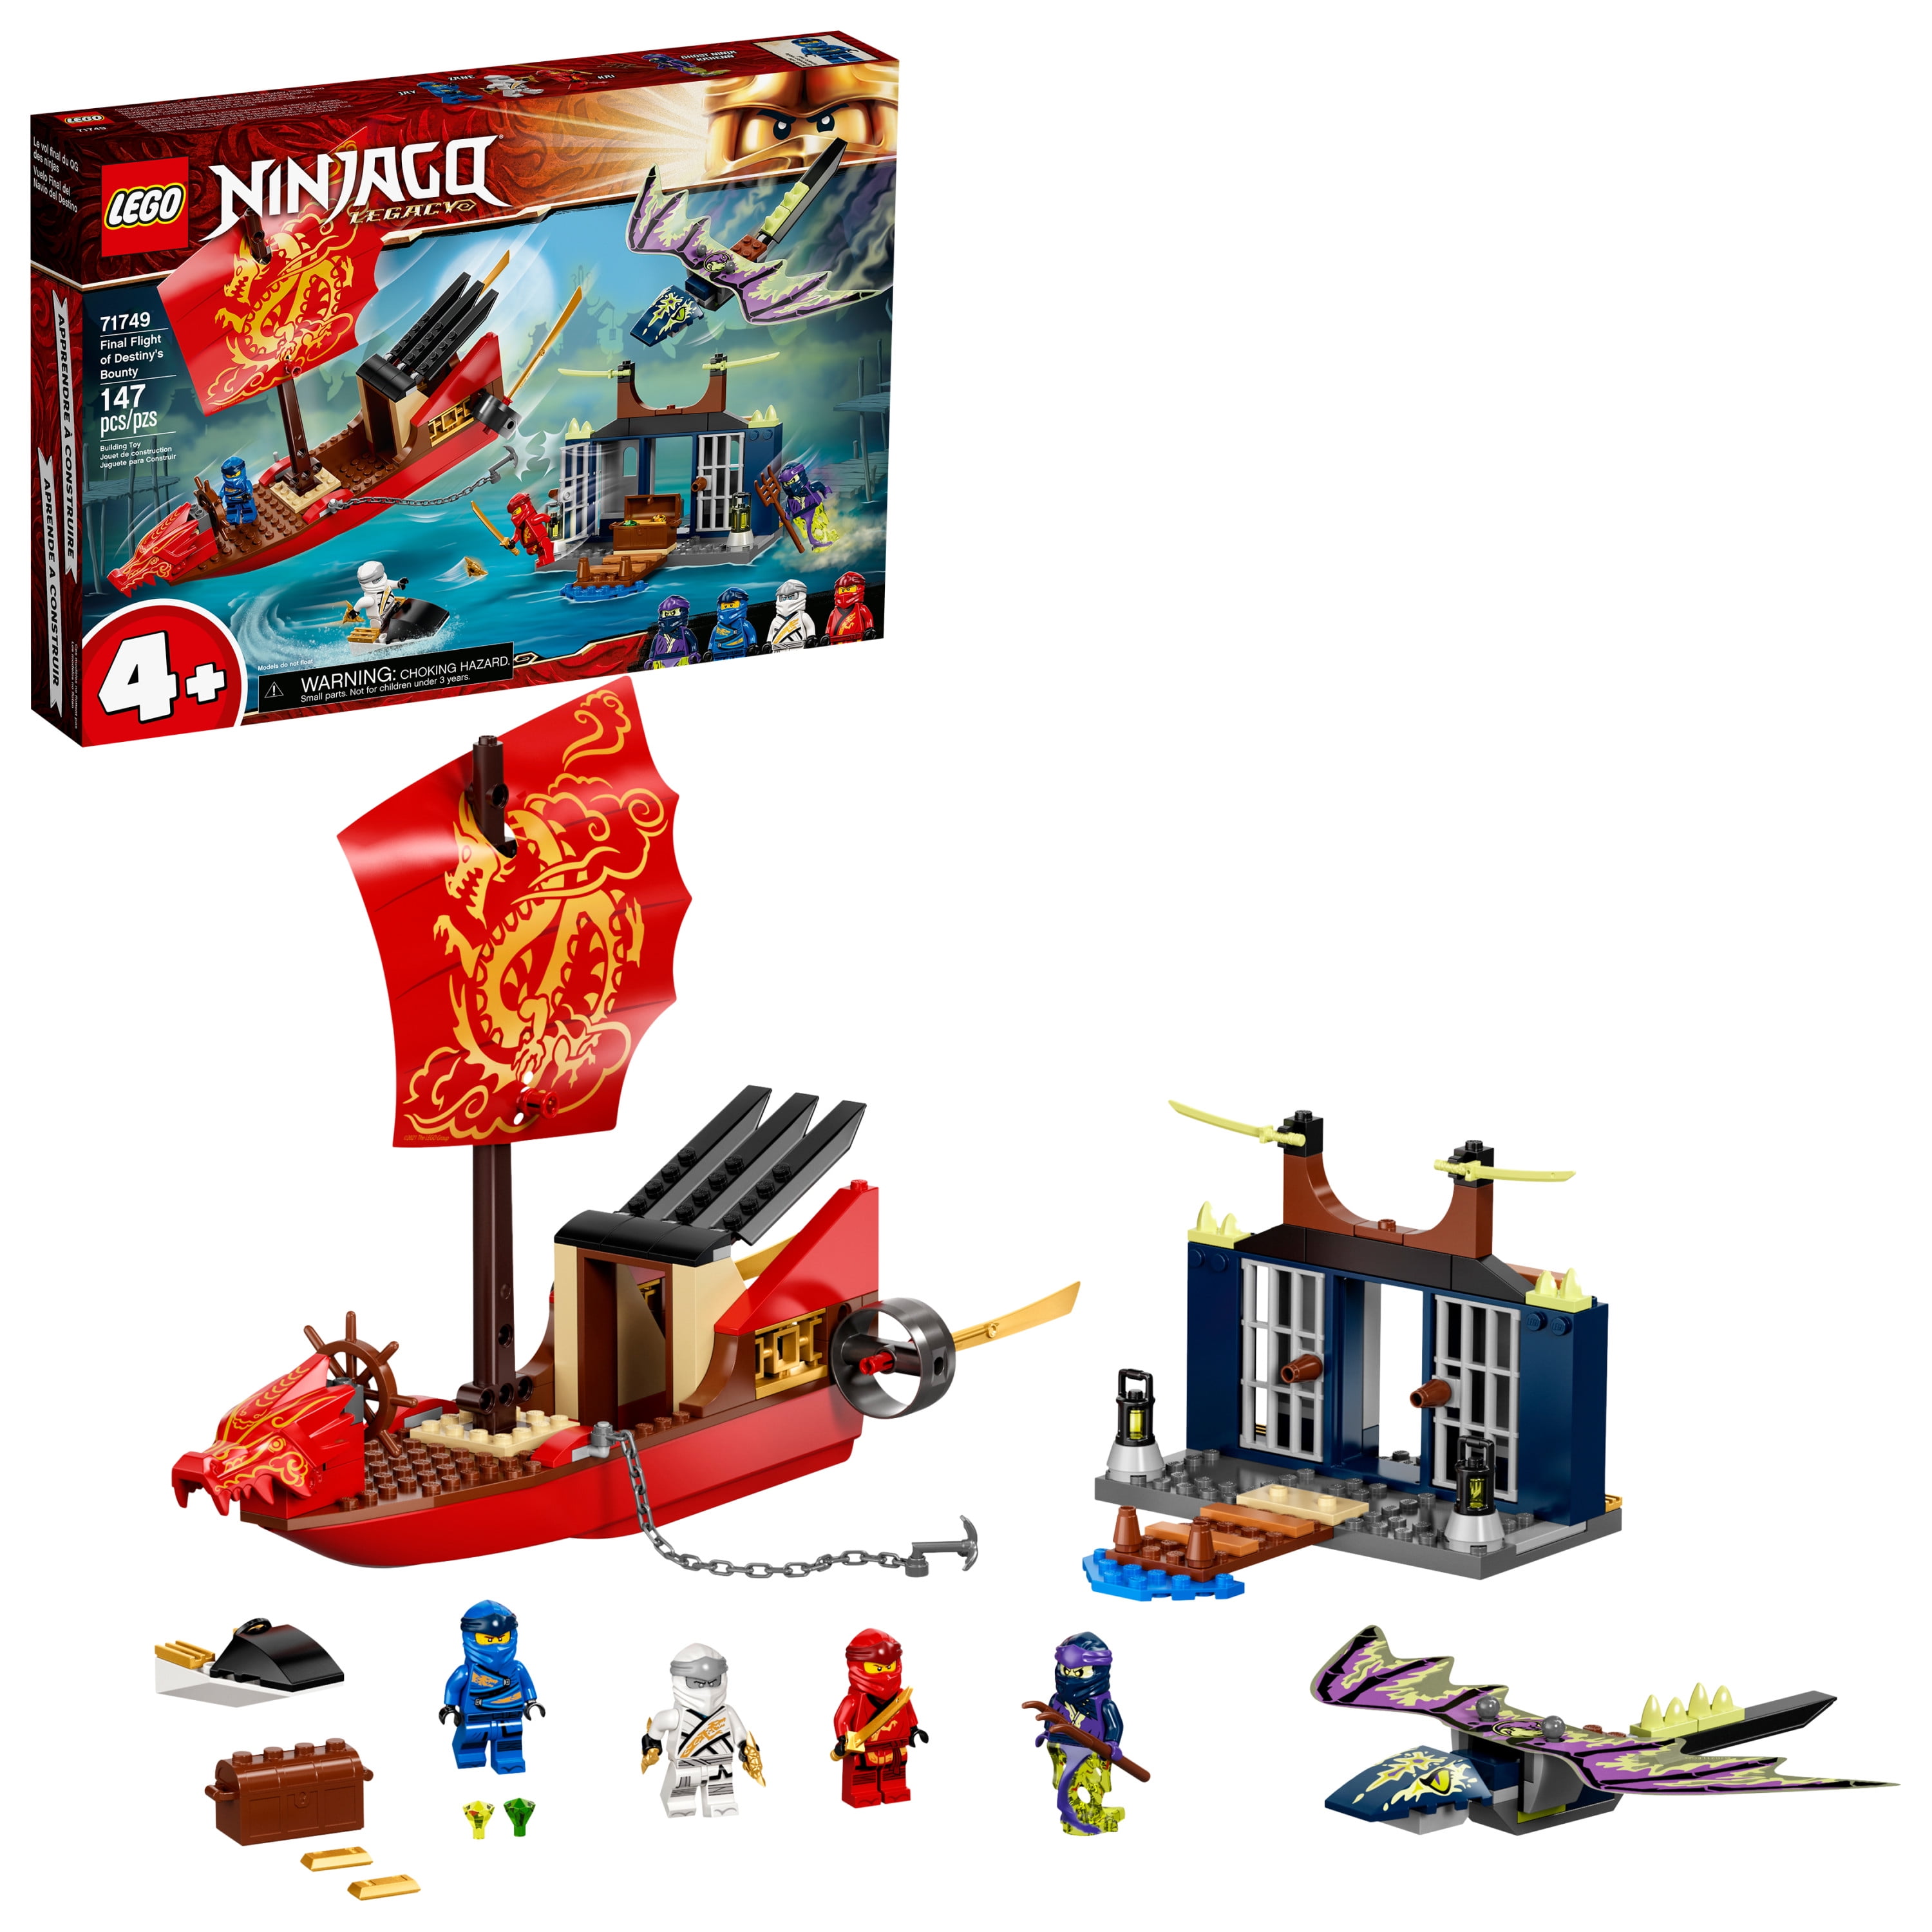 Speak loudly mythology Decode LEGO NINJAGO Water Dragon 71754 Building Toy with Posable Ninja Dragon Toy  (737 Pieces) - Walmart.com